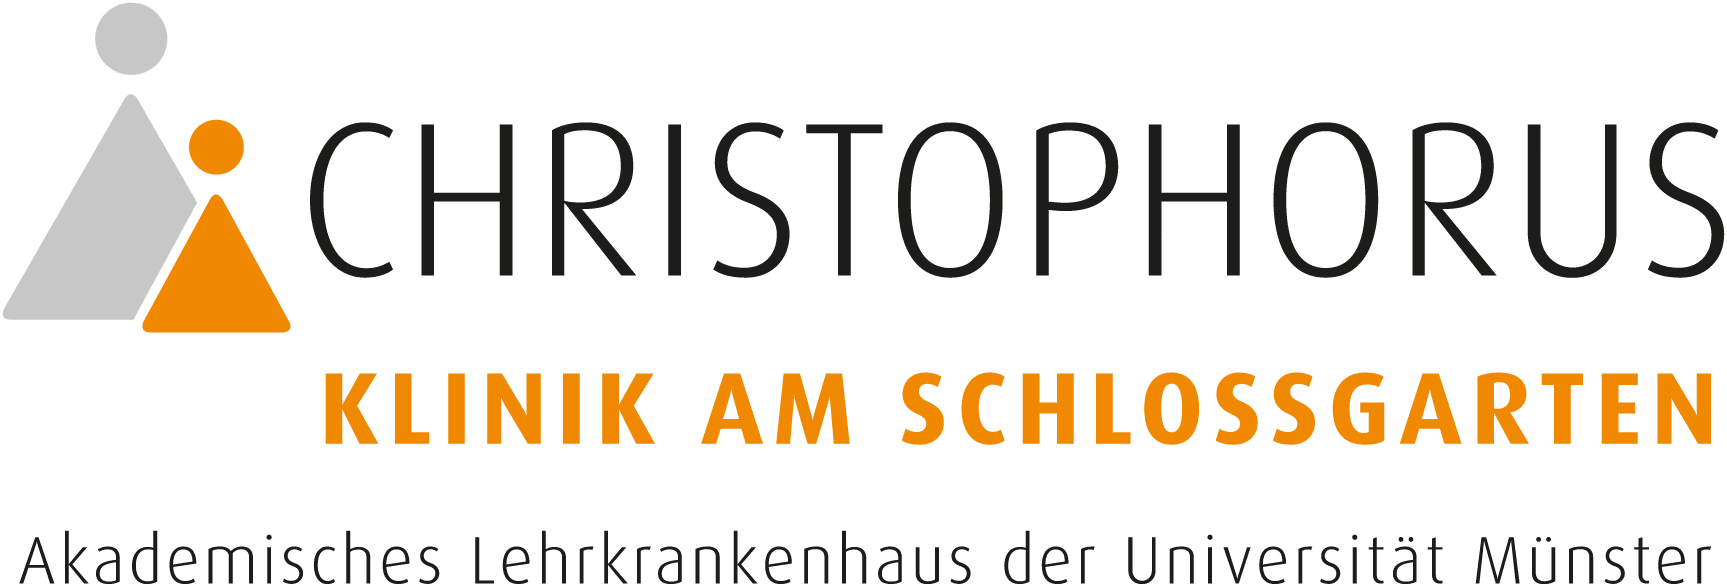 Christoph_Kliniken_Schlossgarten_mitUZ